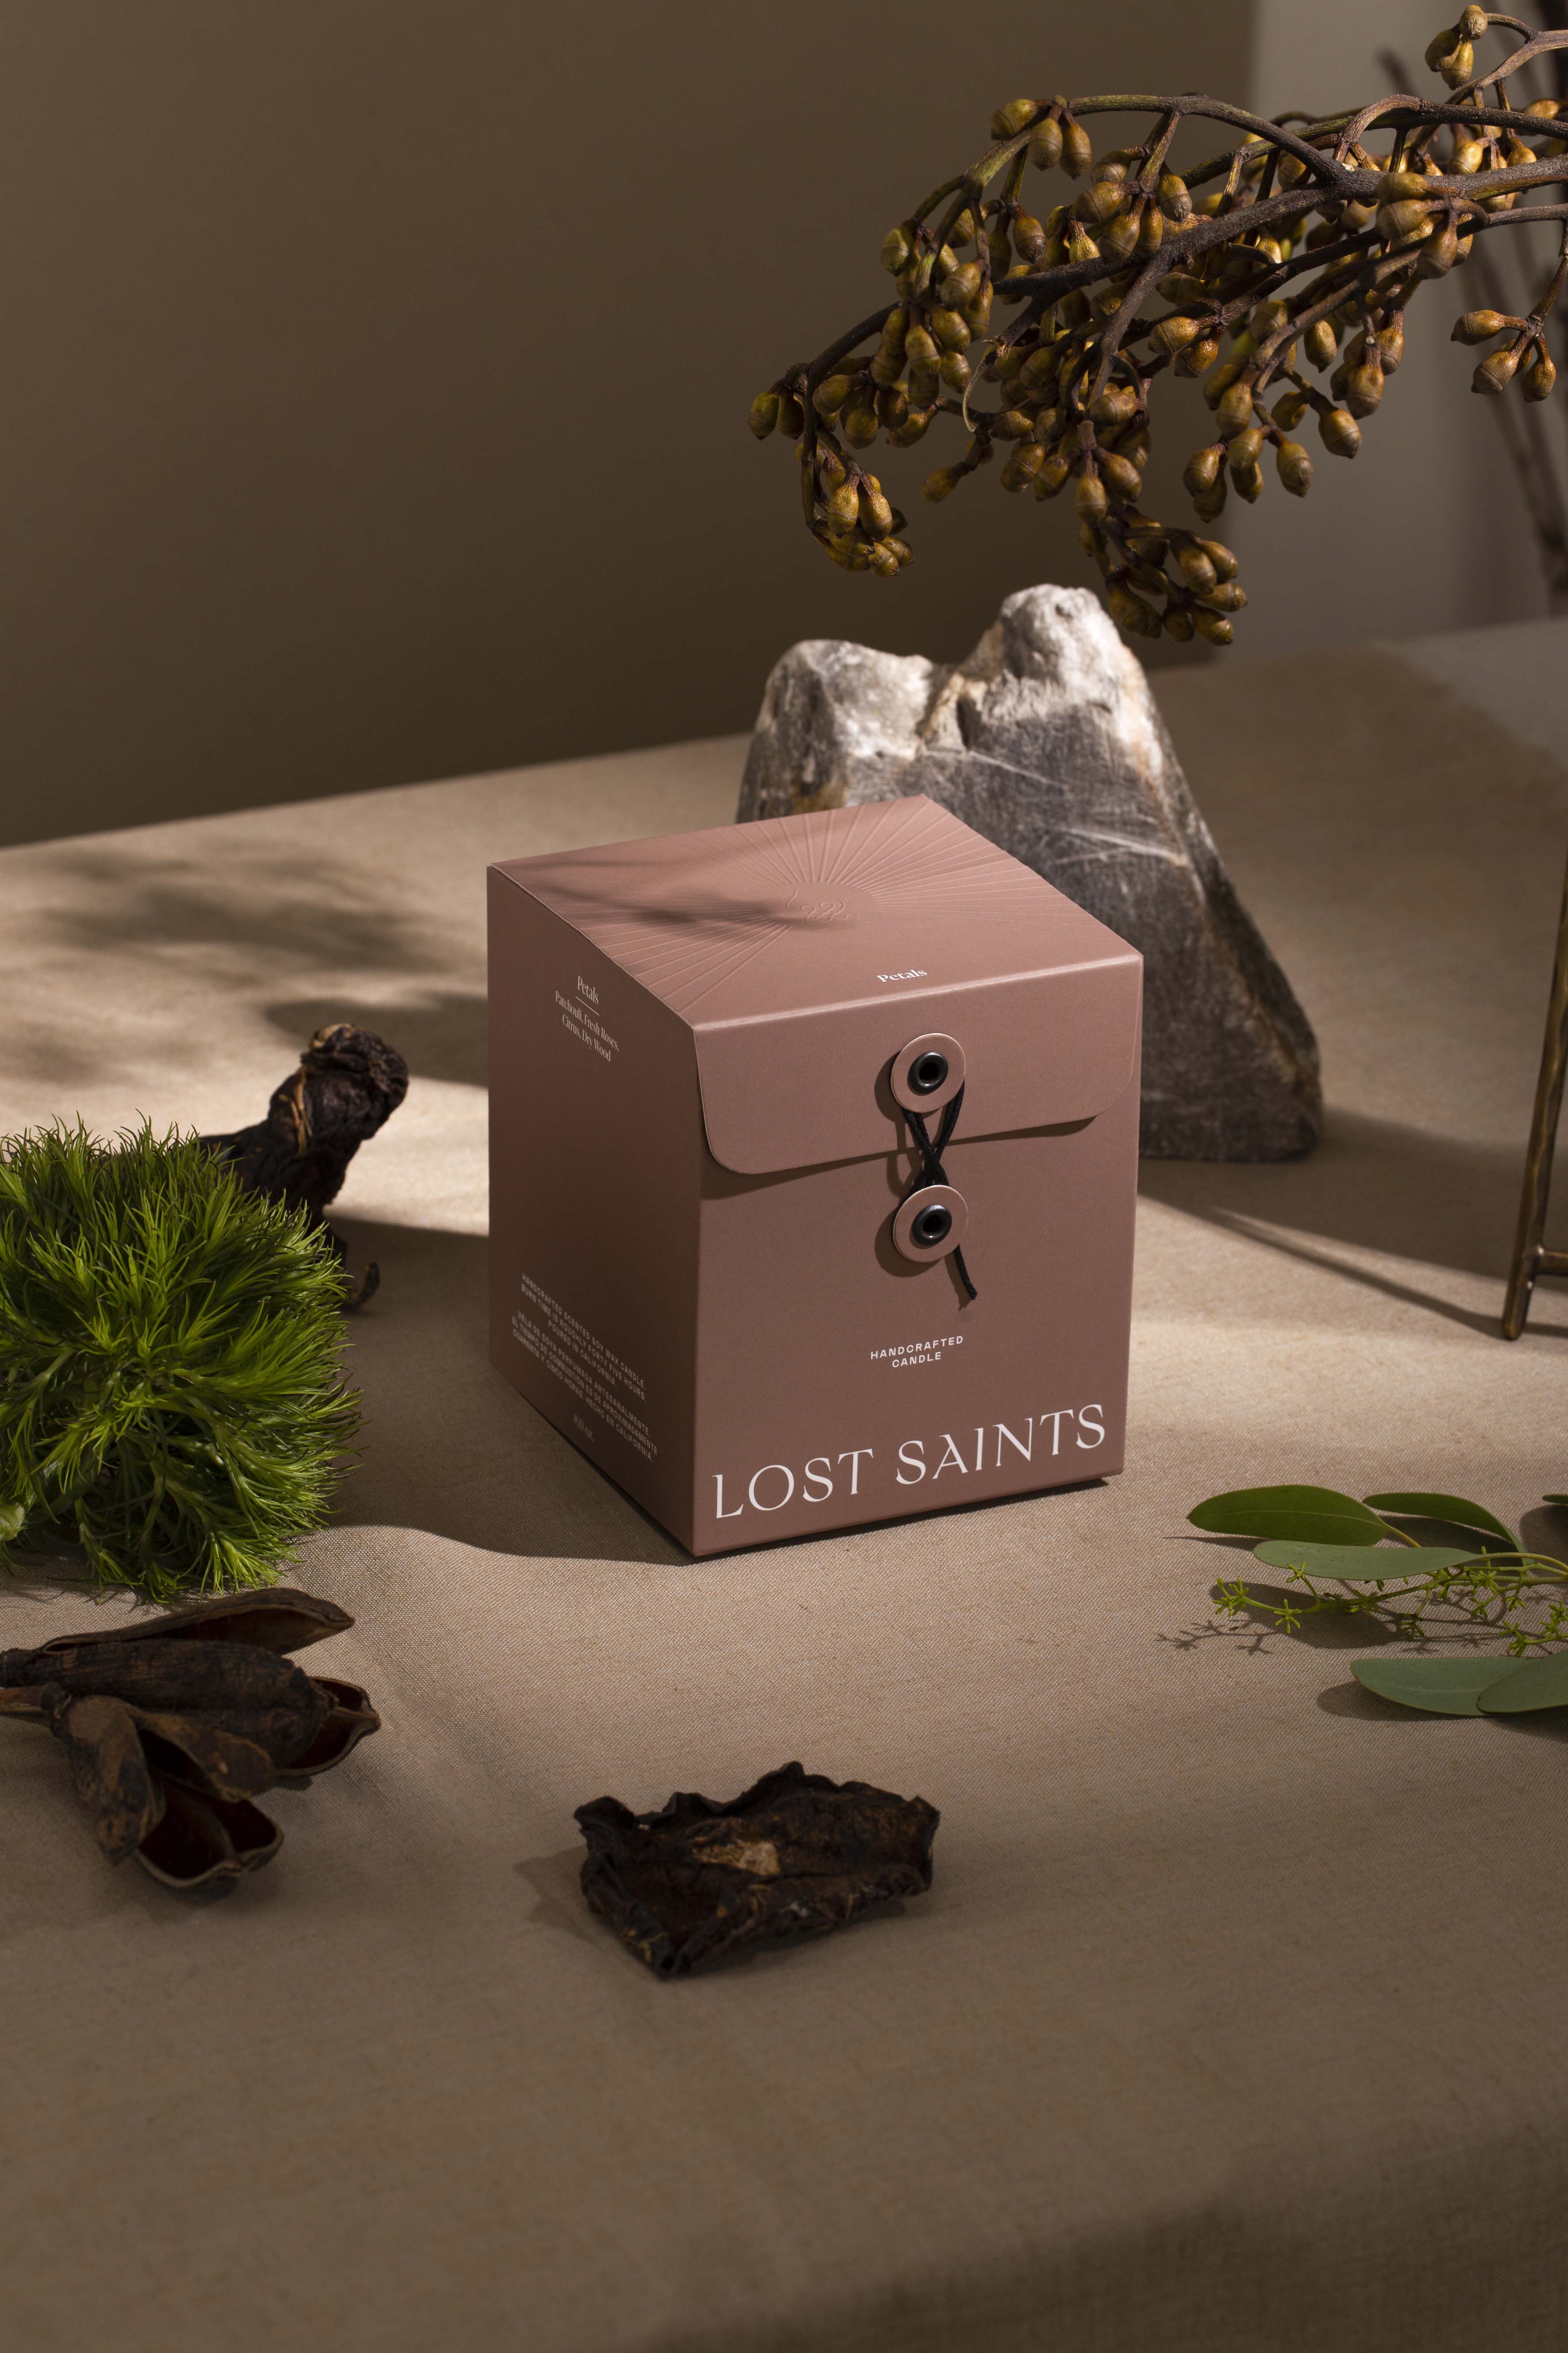 Lost Saints Vegan Artisanal Candle Packaging Design